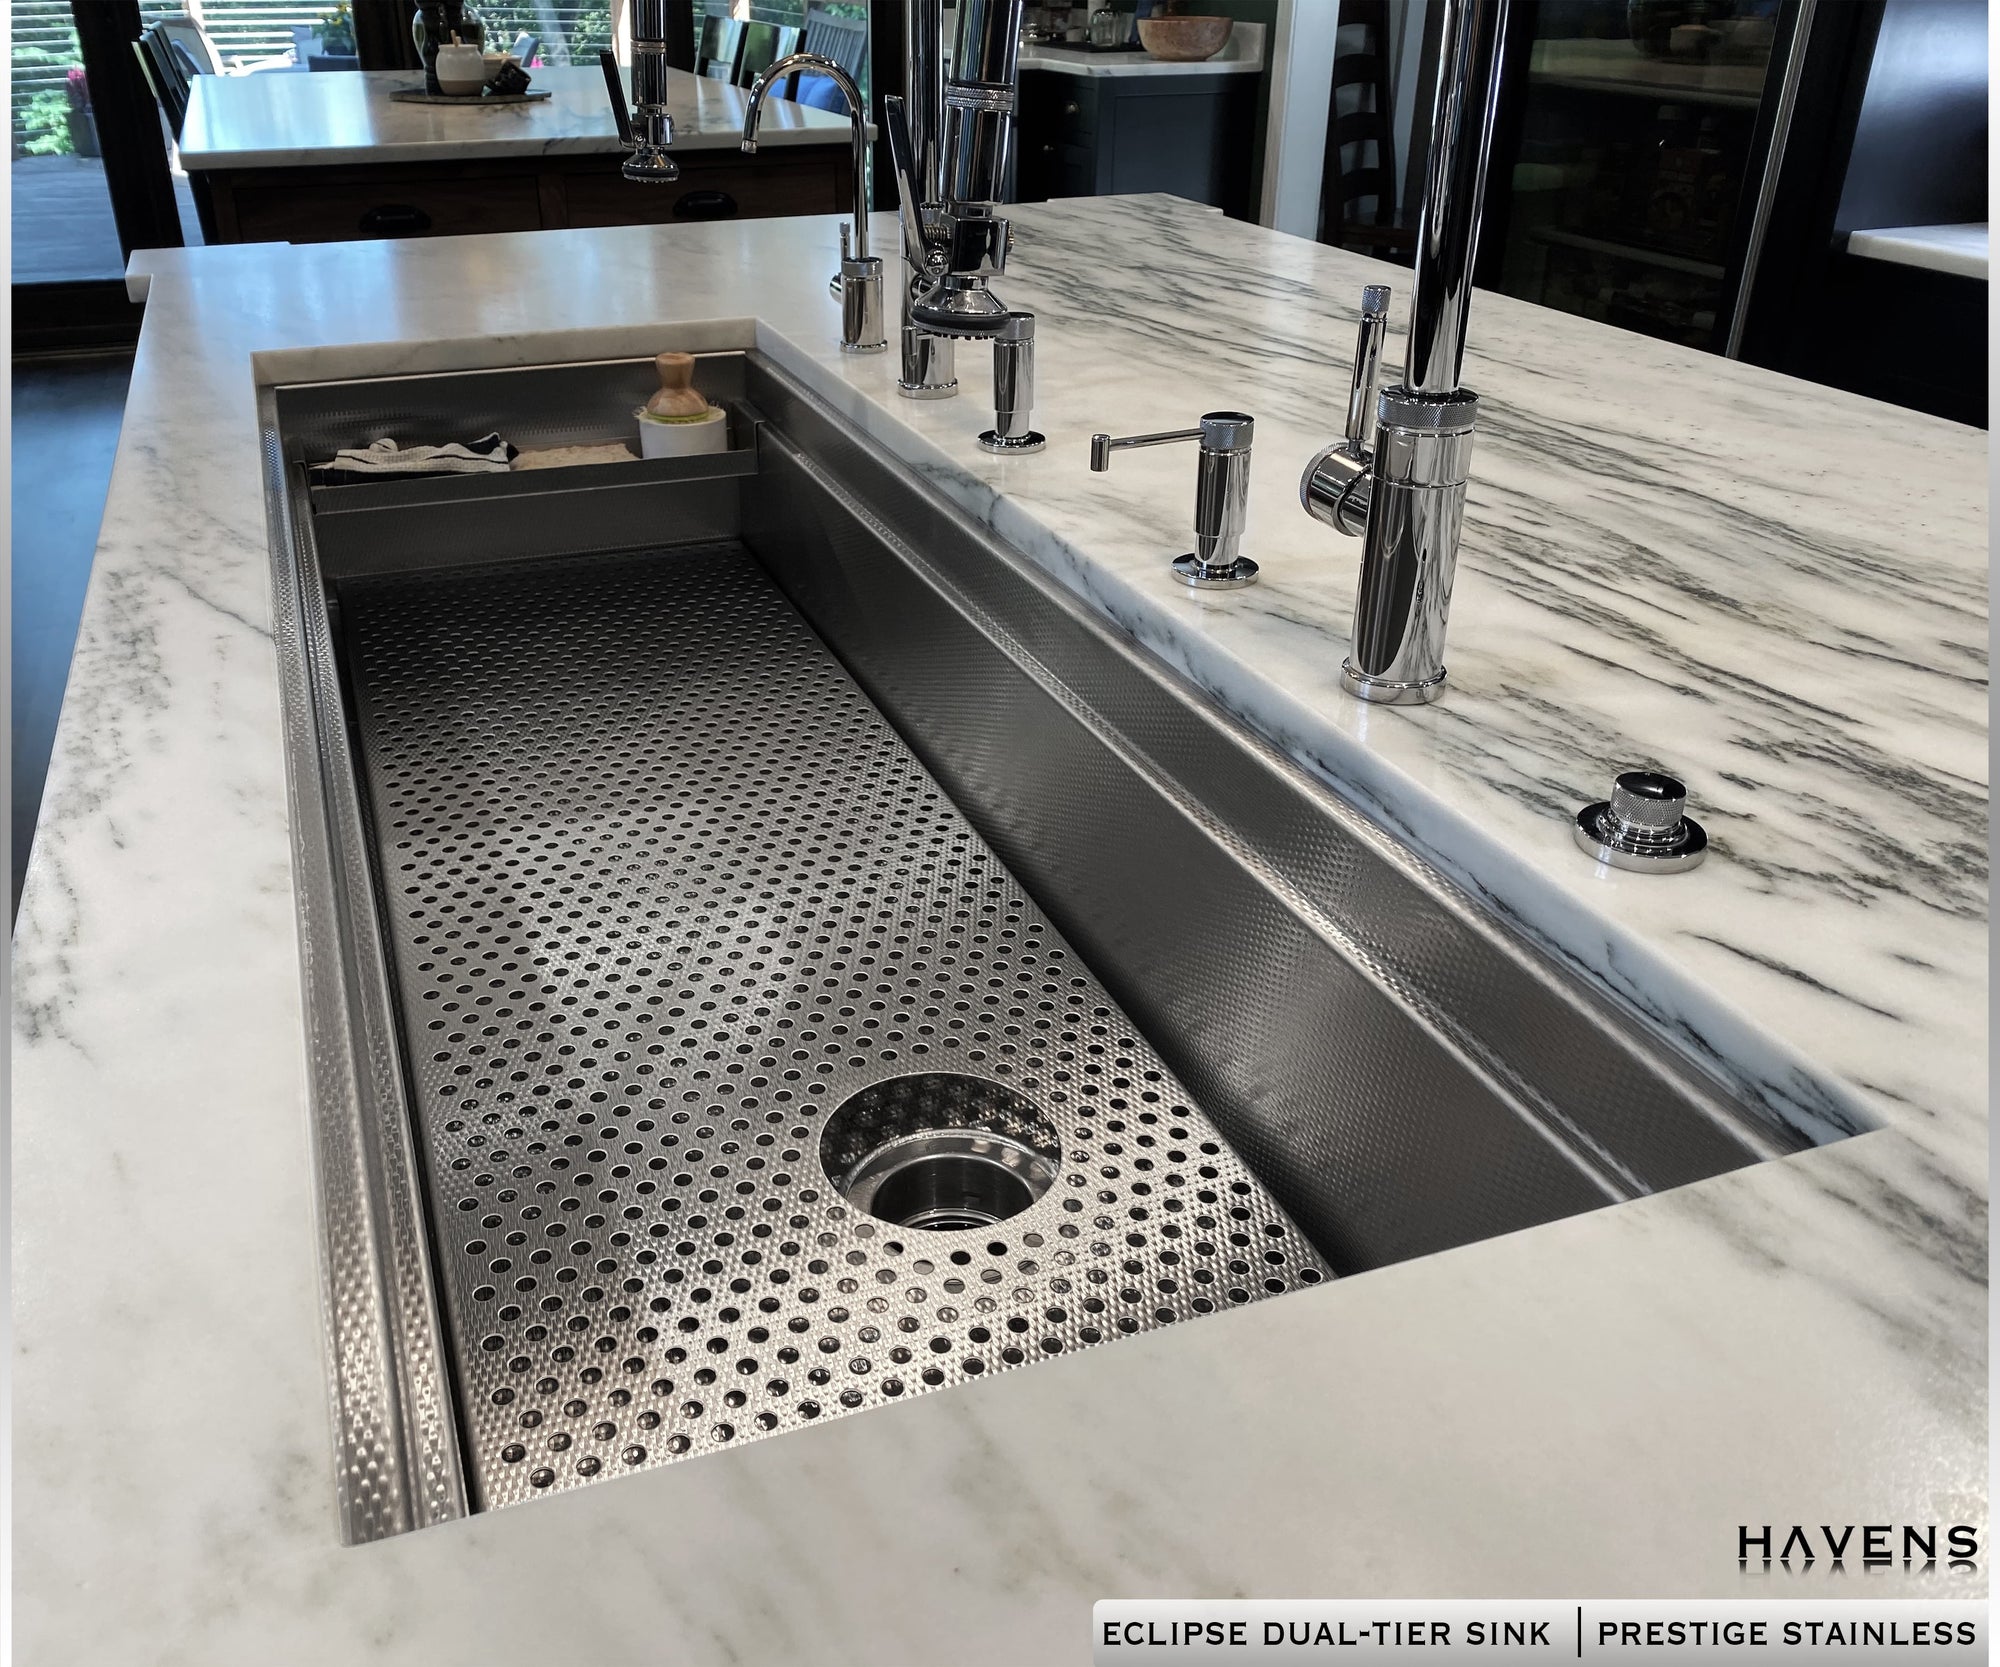 Prestige Stainless Basin Grate installed in high end workstation kitchen 